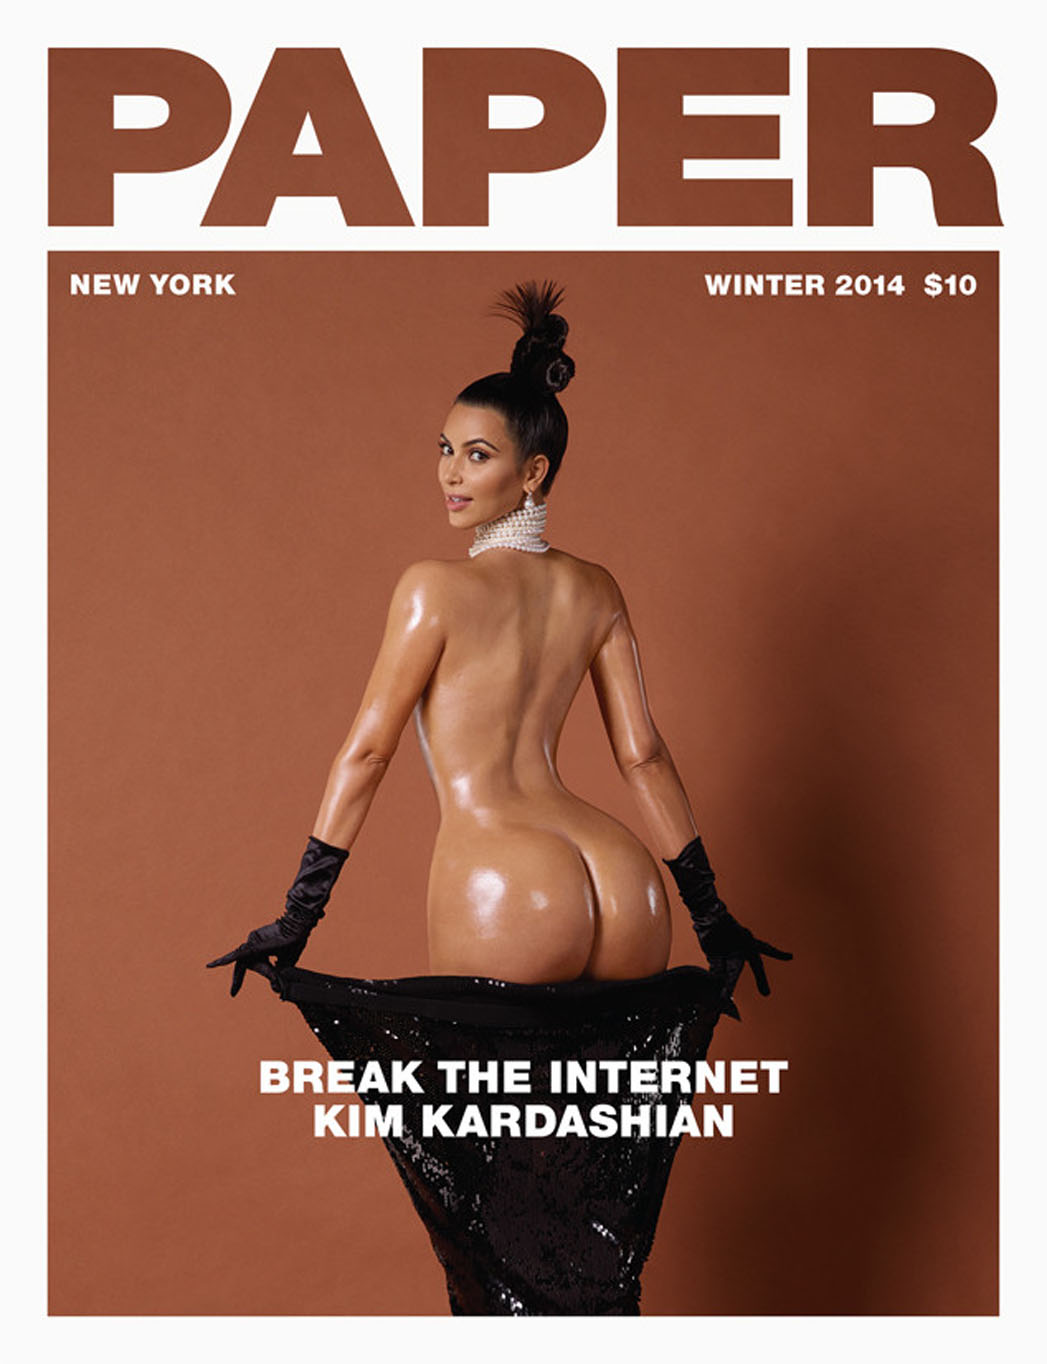 dan nolting recommends kim kardashian nude selfies leaked pic